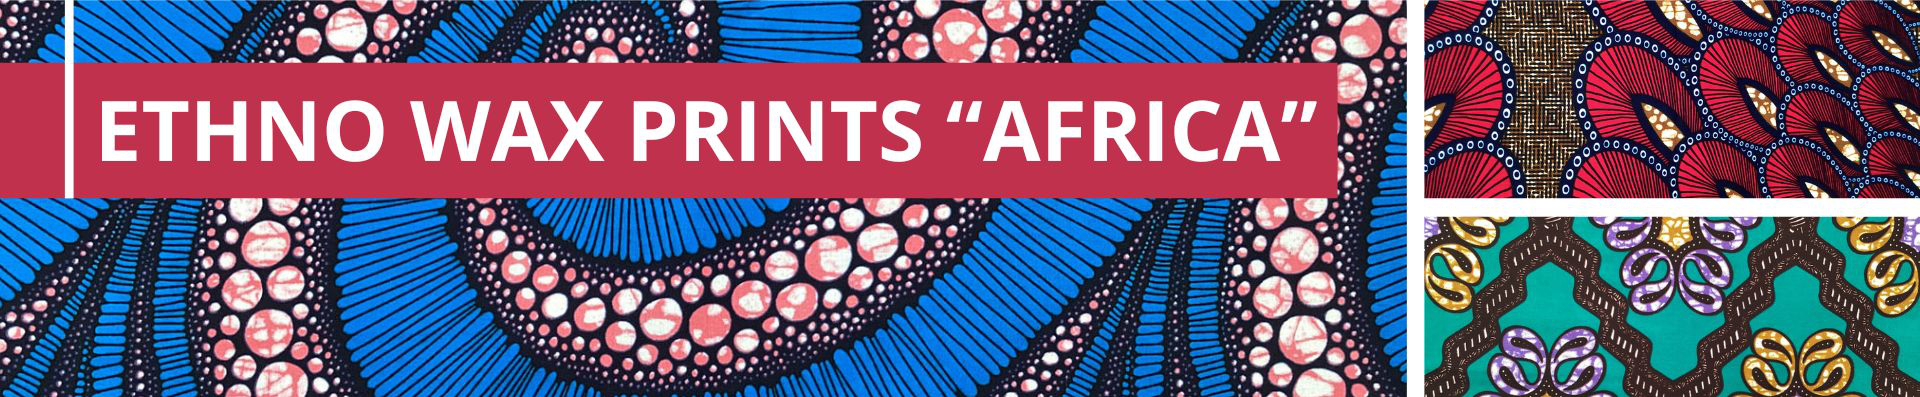 Ethno Wax Prints "Africa"